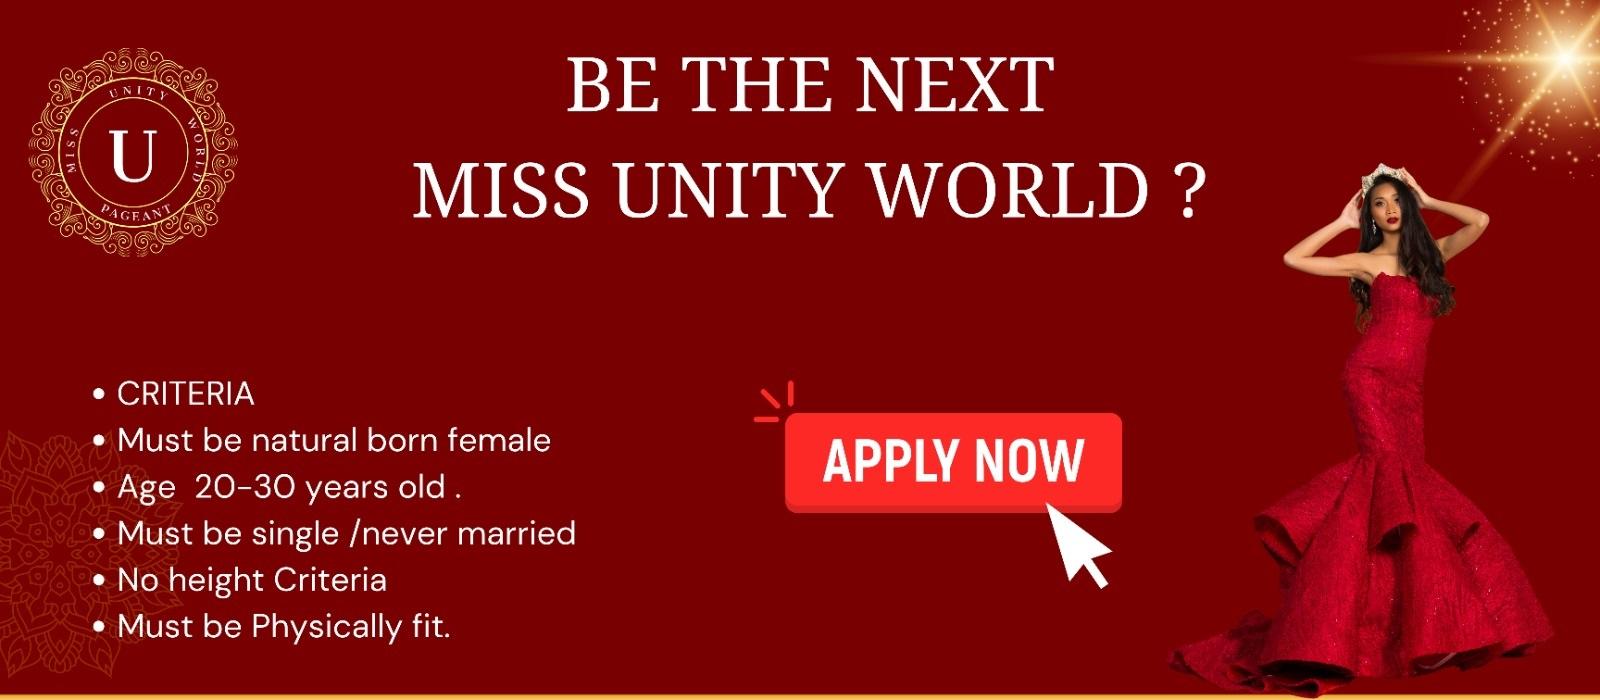 Ms. Unity World